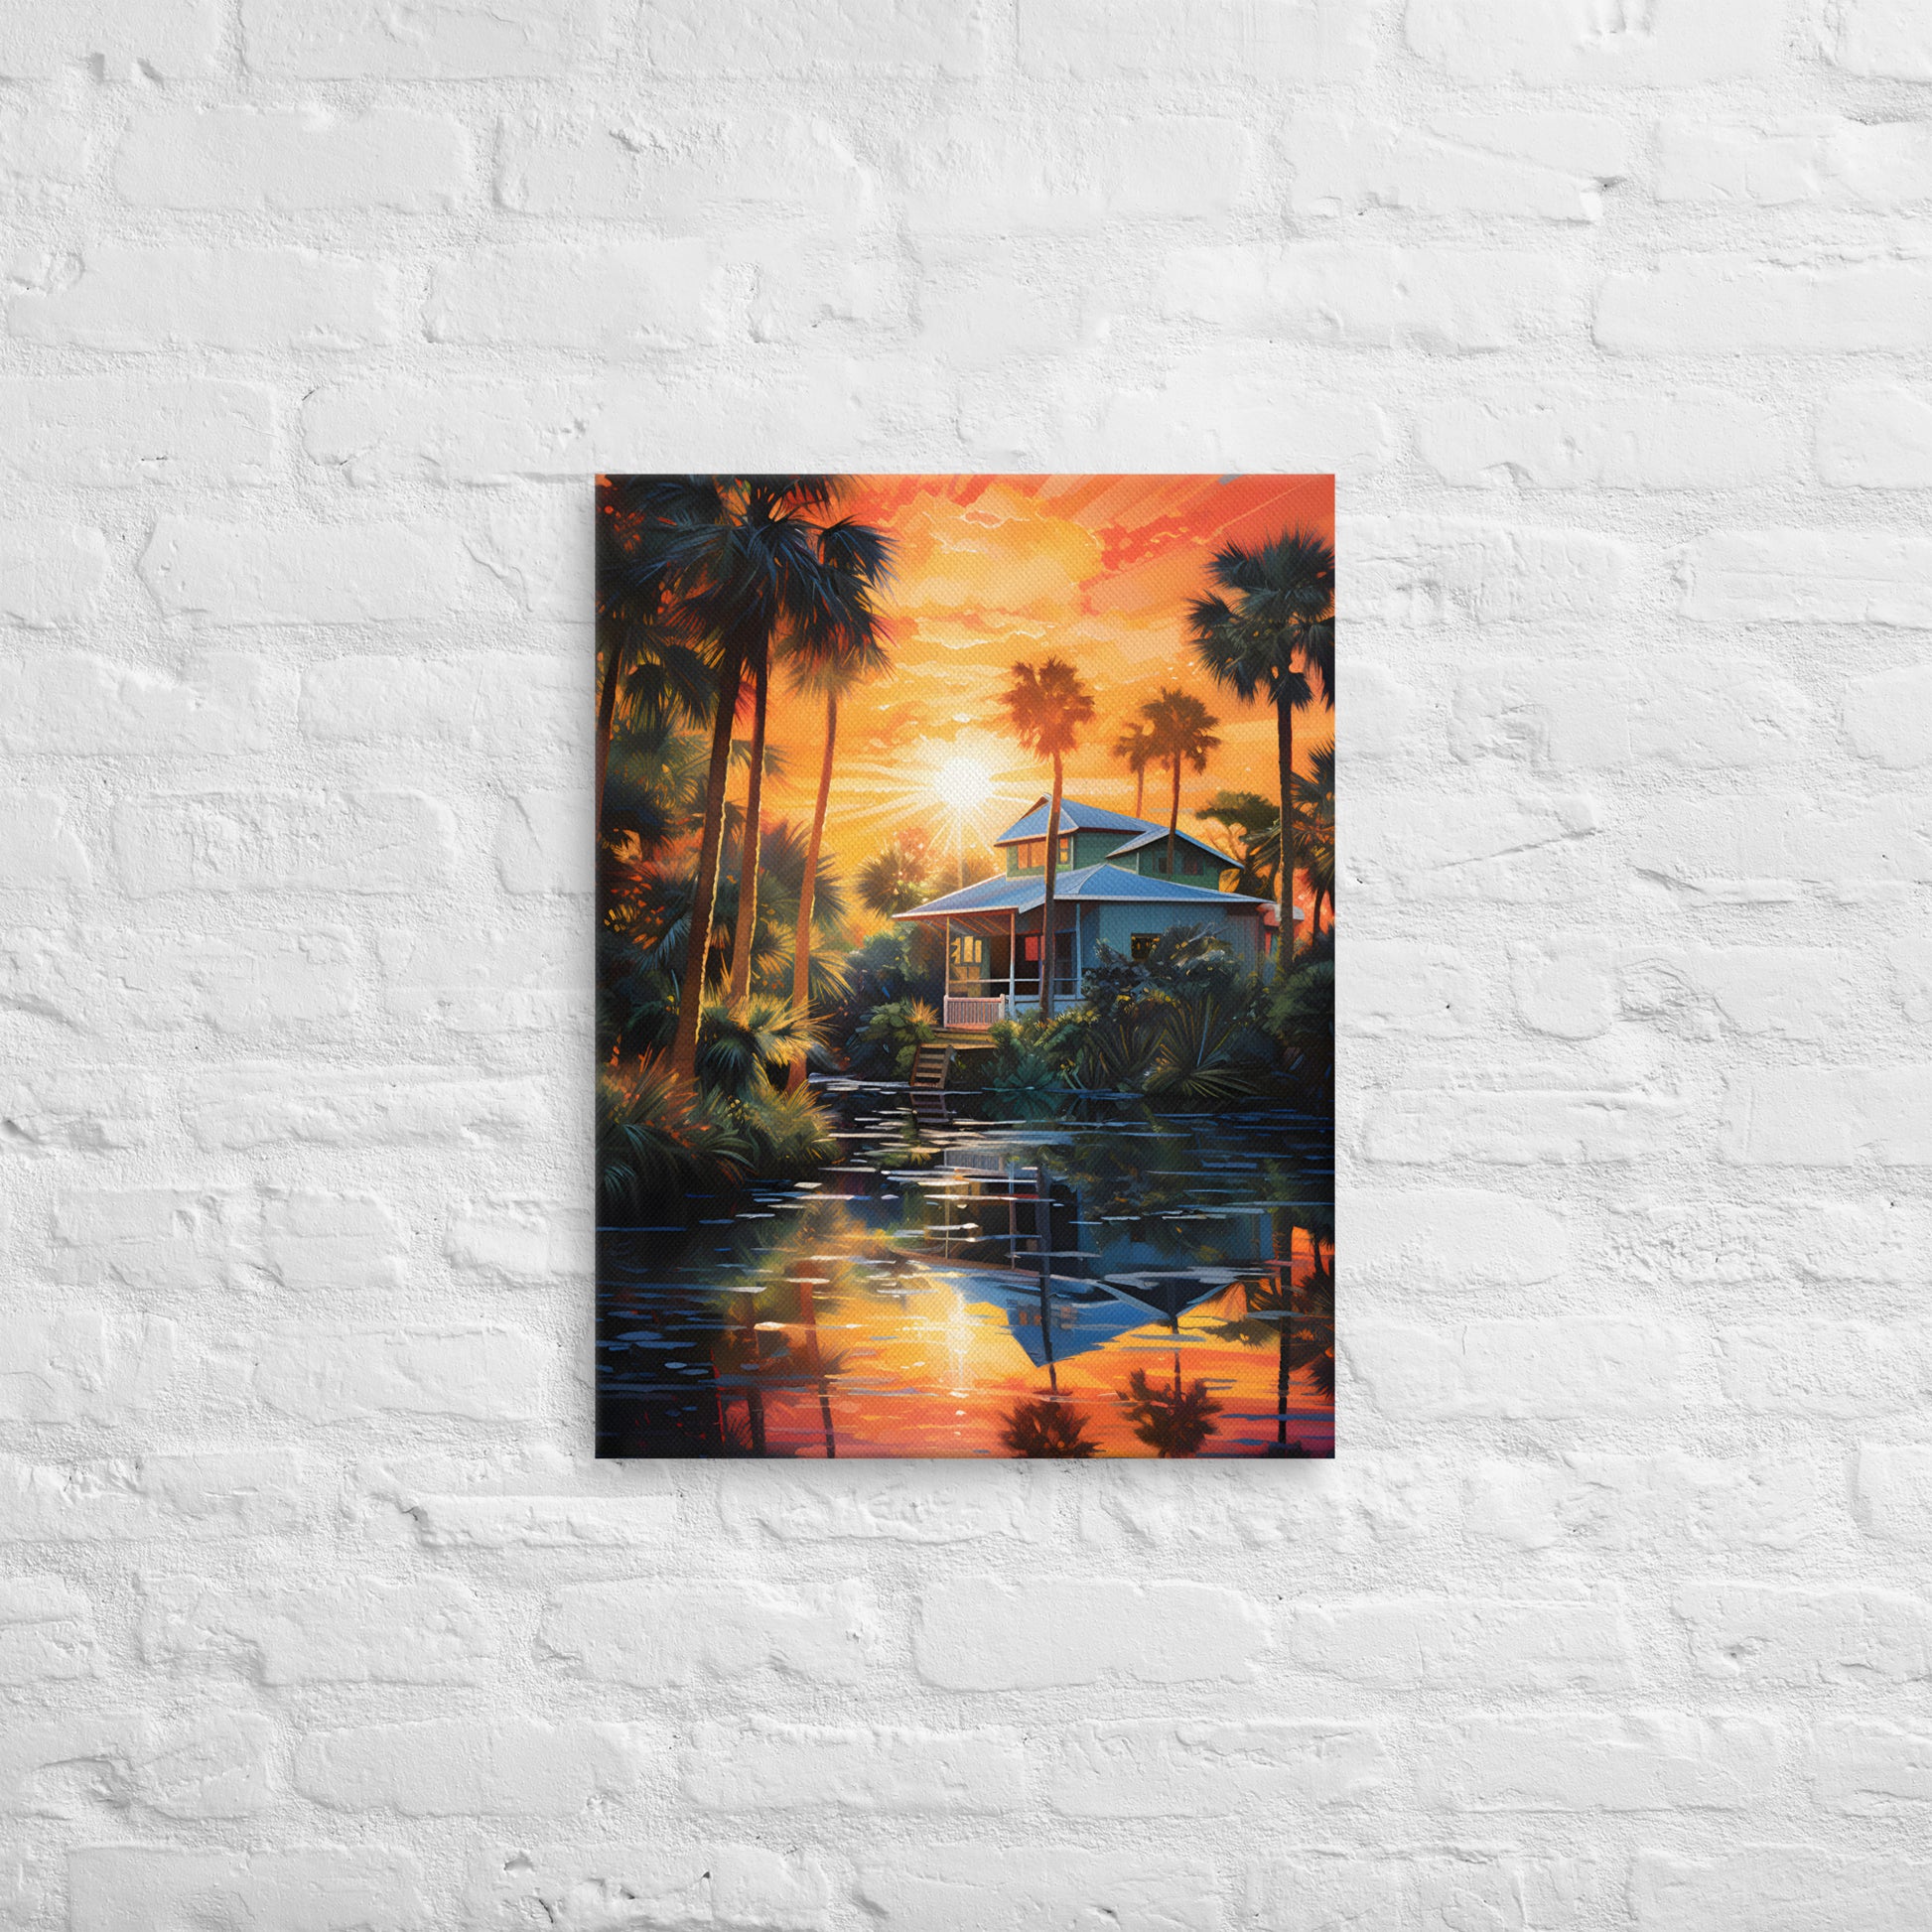 Florida Home at Sunset, Thin Canvas Print 18x24